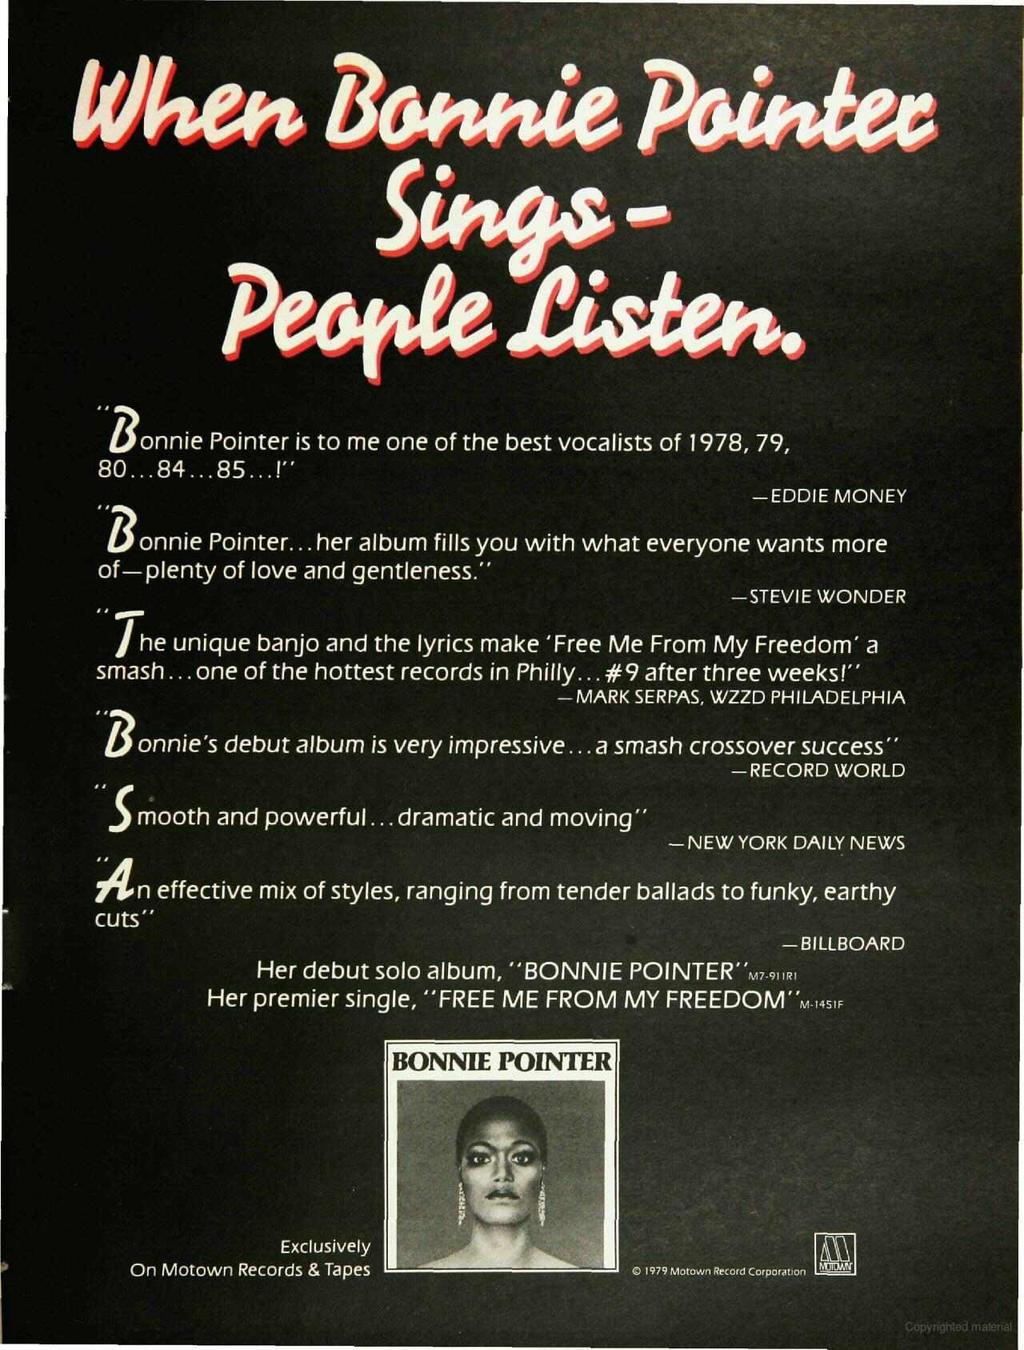 Whe 1ot#tie P c.ùtec Ciste. Bonnie Pointer is to me one of the best vocalists of 1978, 79, 80...84...85..." -EDDE MONEY r onnie Pointer.